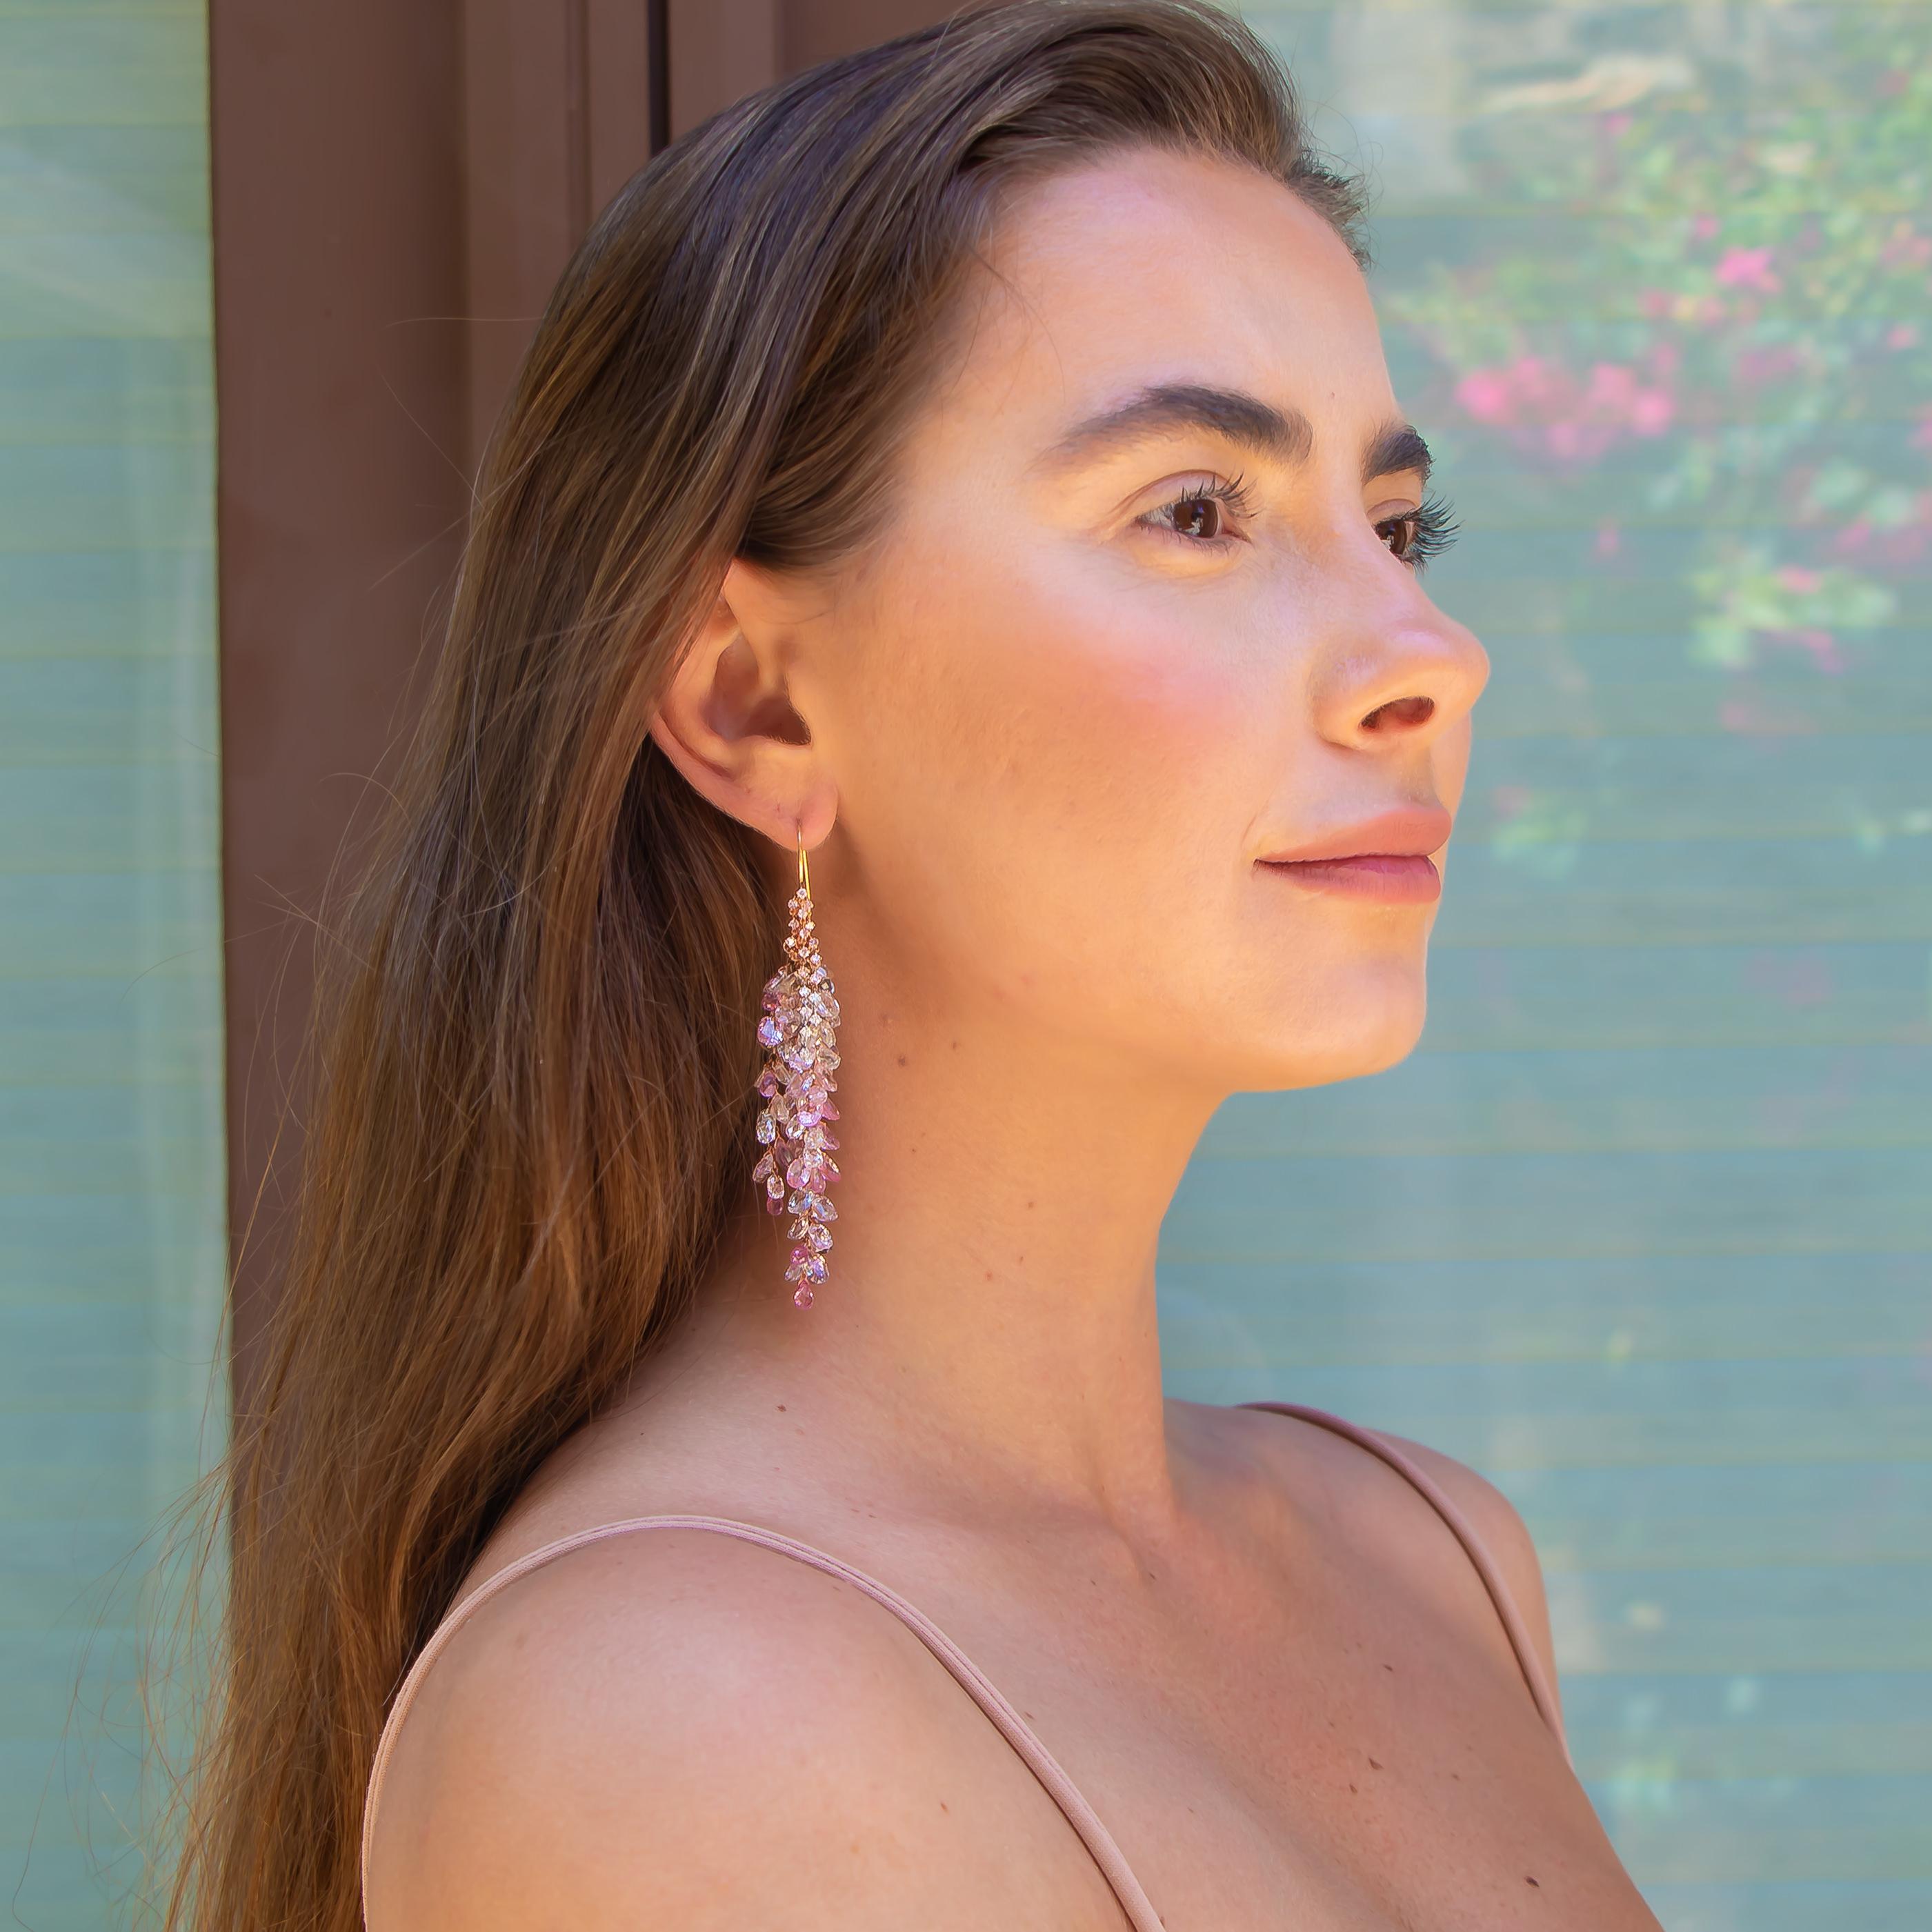 Modern Sidney Garber Pink Sapphires and Diamonds Earrings 100 Carat Total 18 Karat Gold